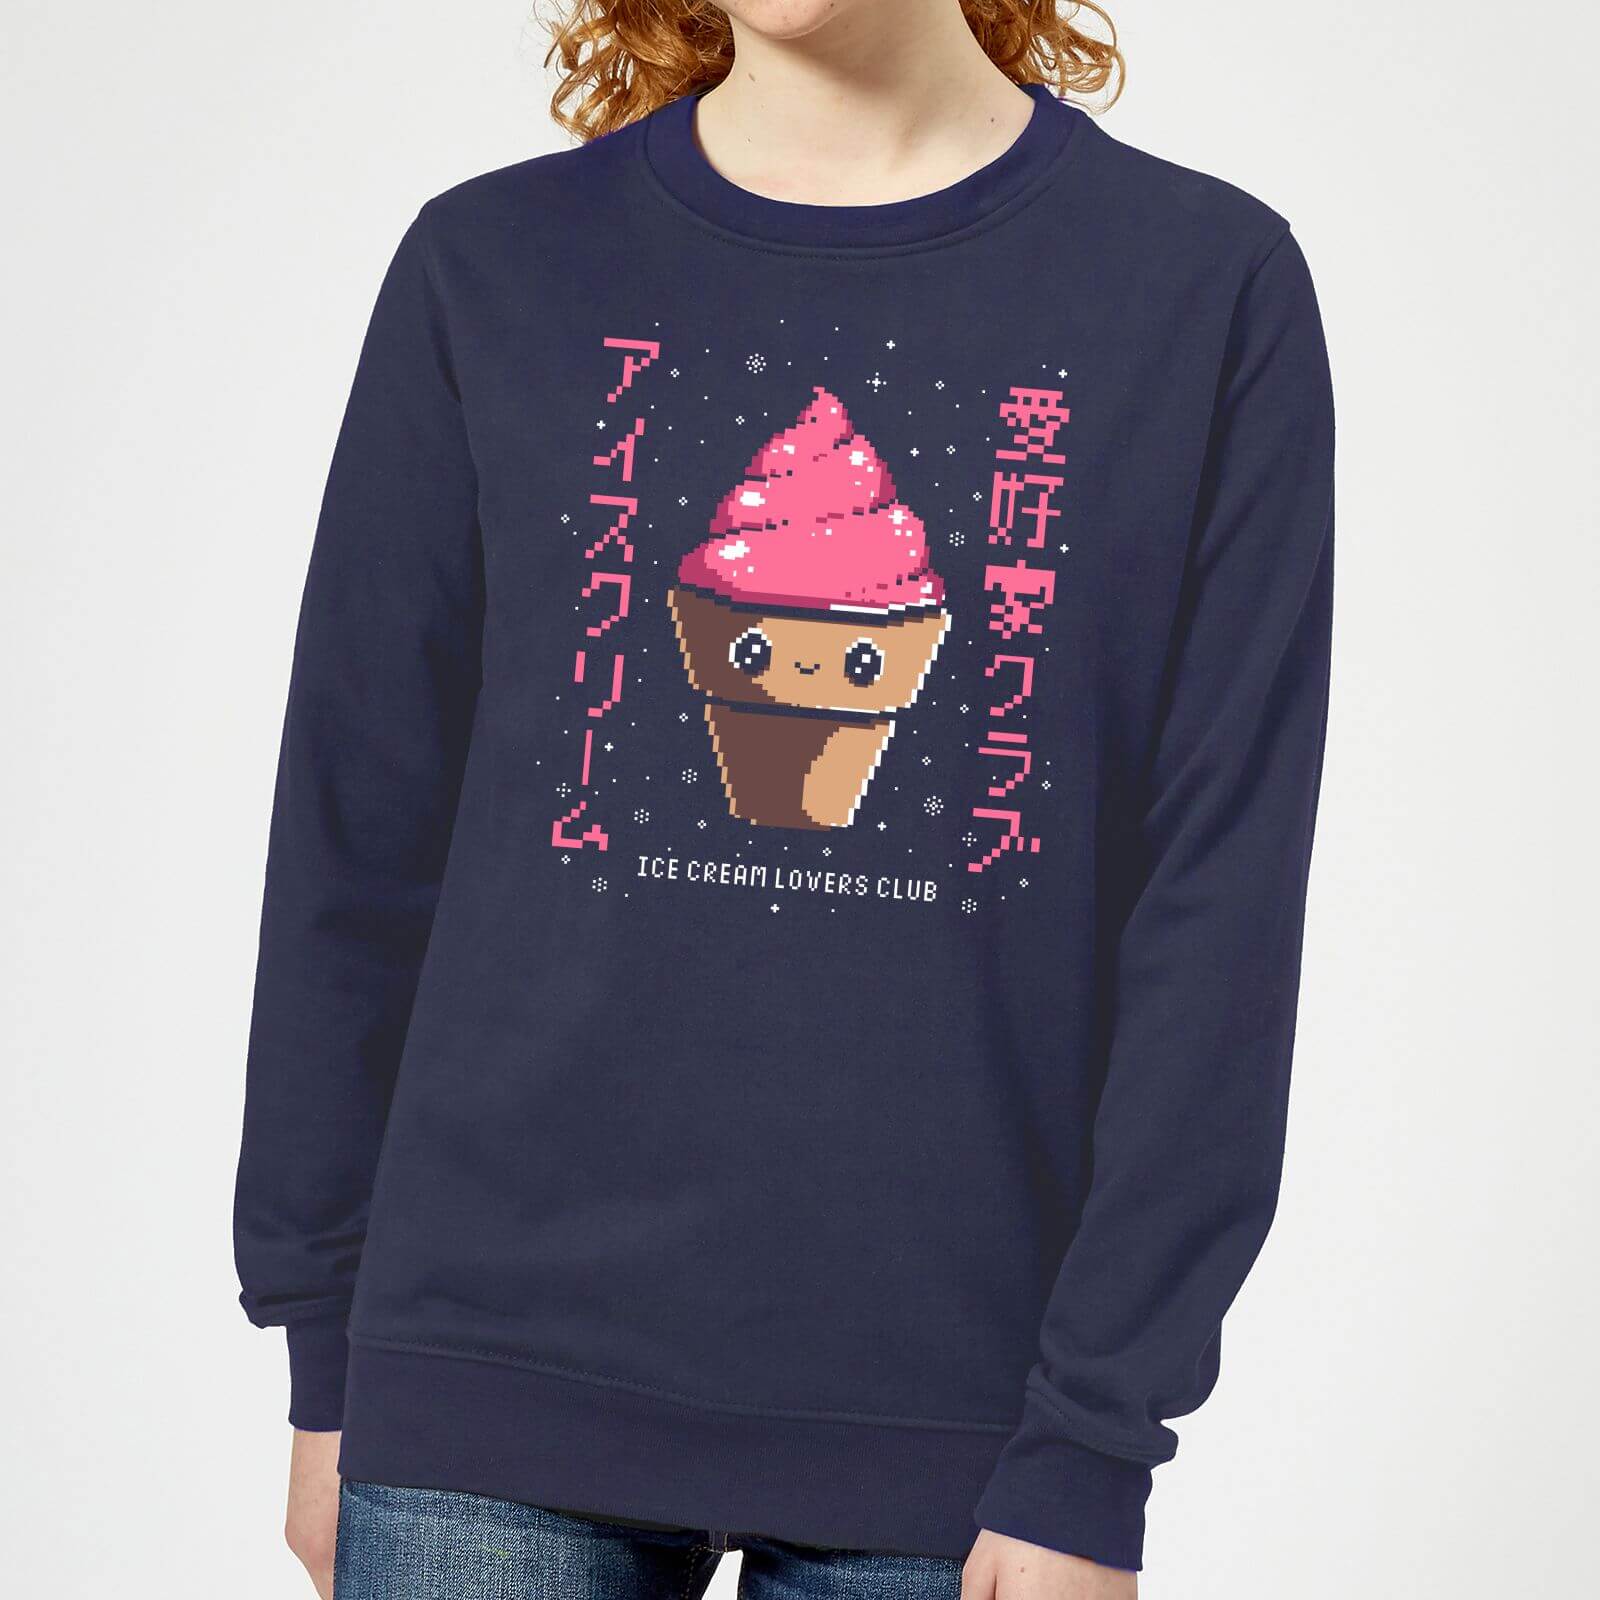 Ilustrata Ice Cream Lovers Club Women's Sweatshirt - Navy - XS - Navy